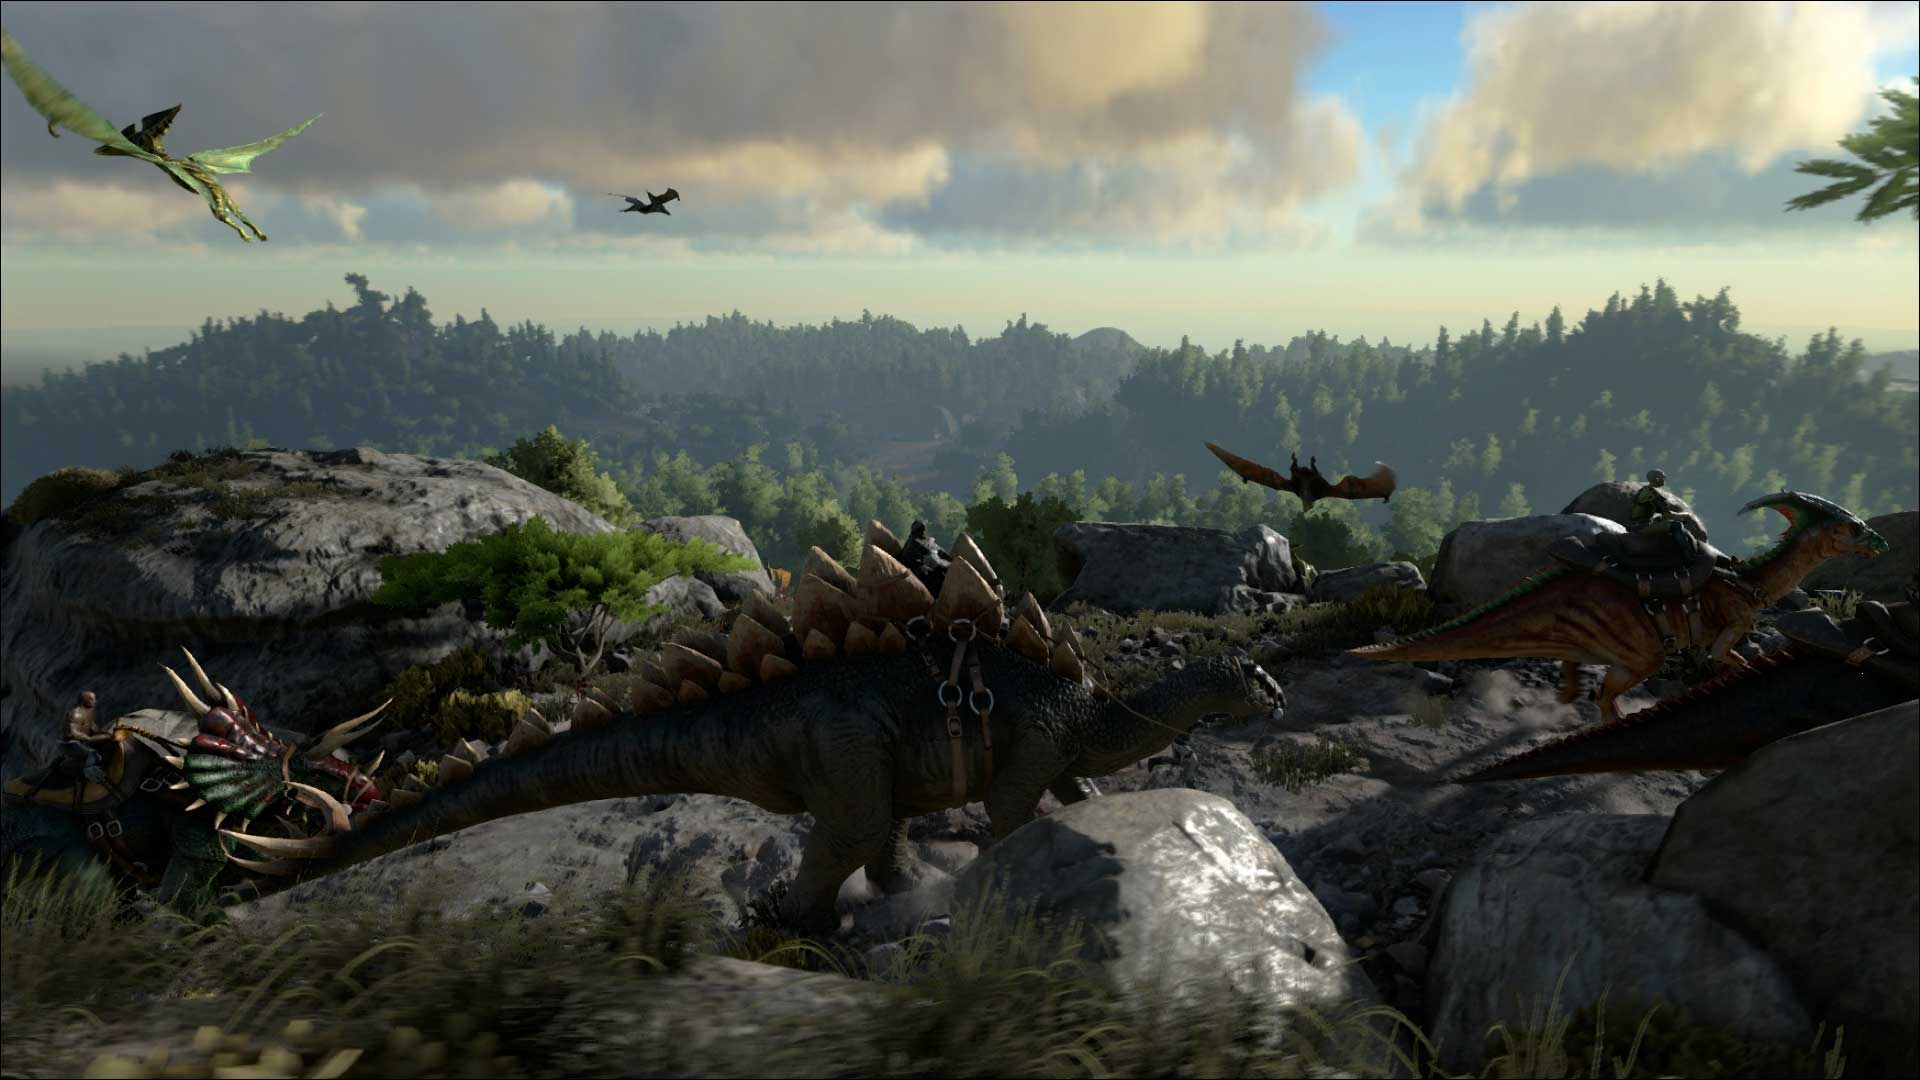 Скриншот к игре ARK: Survival Evolved